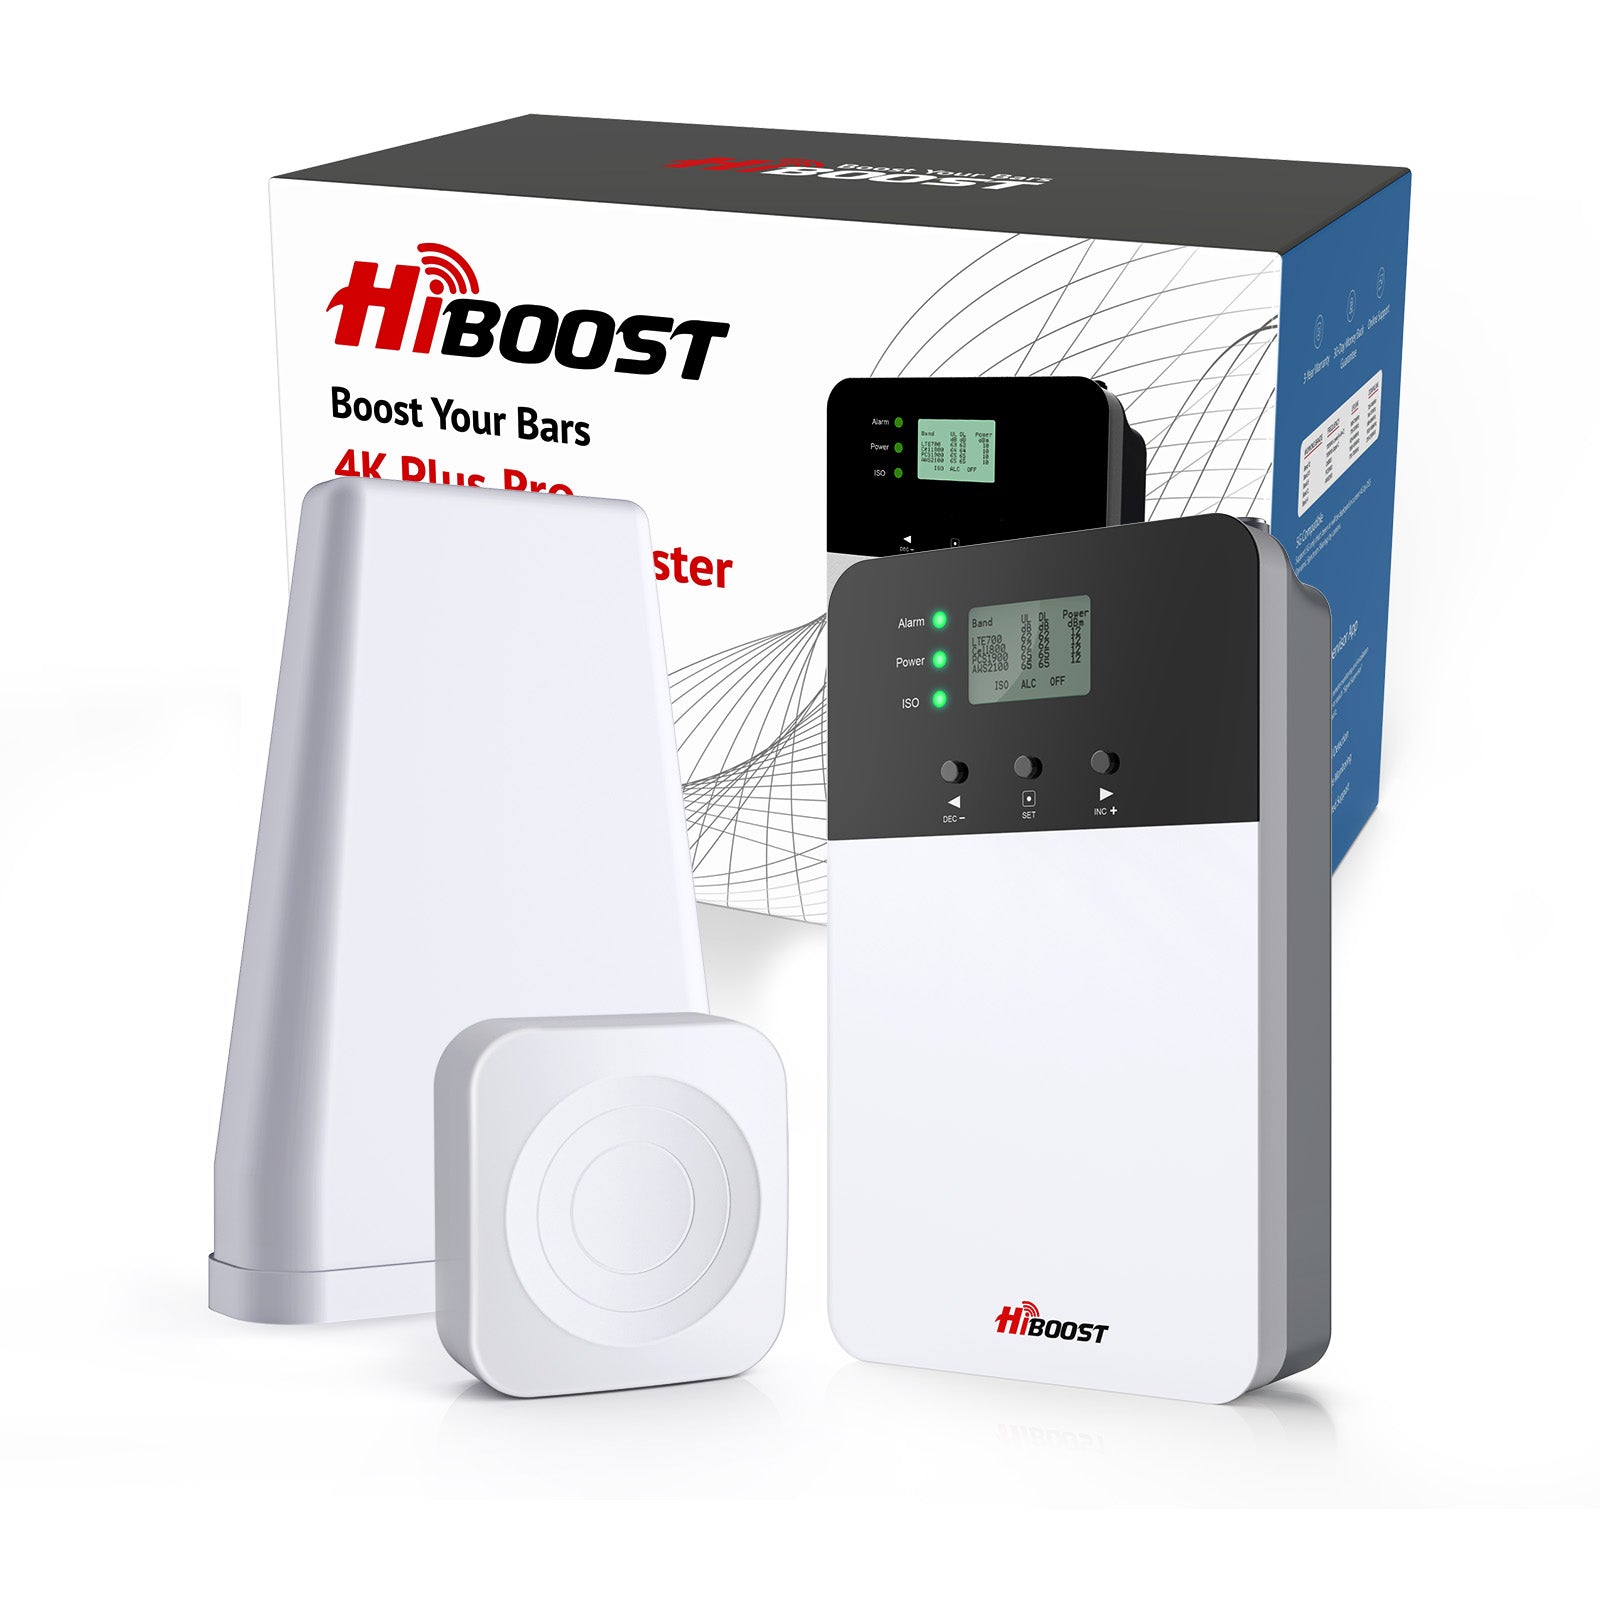 HiBoost 4K Plus Pro